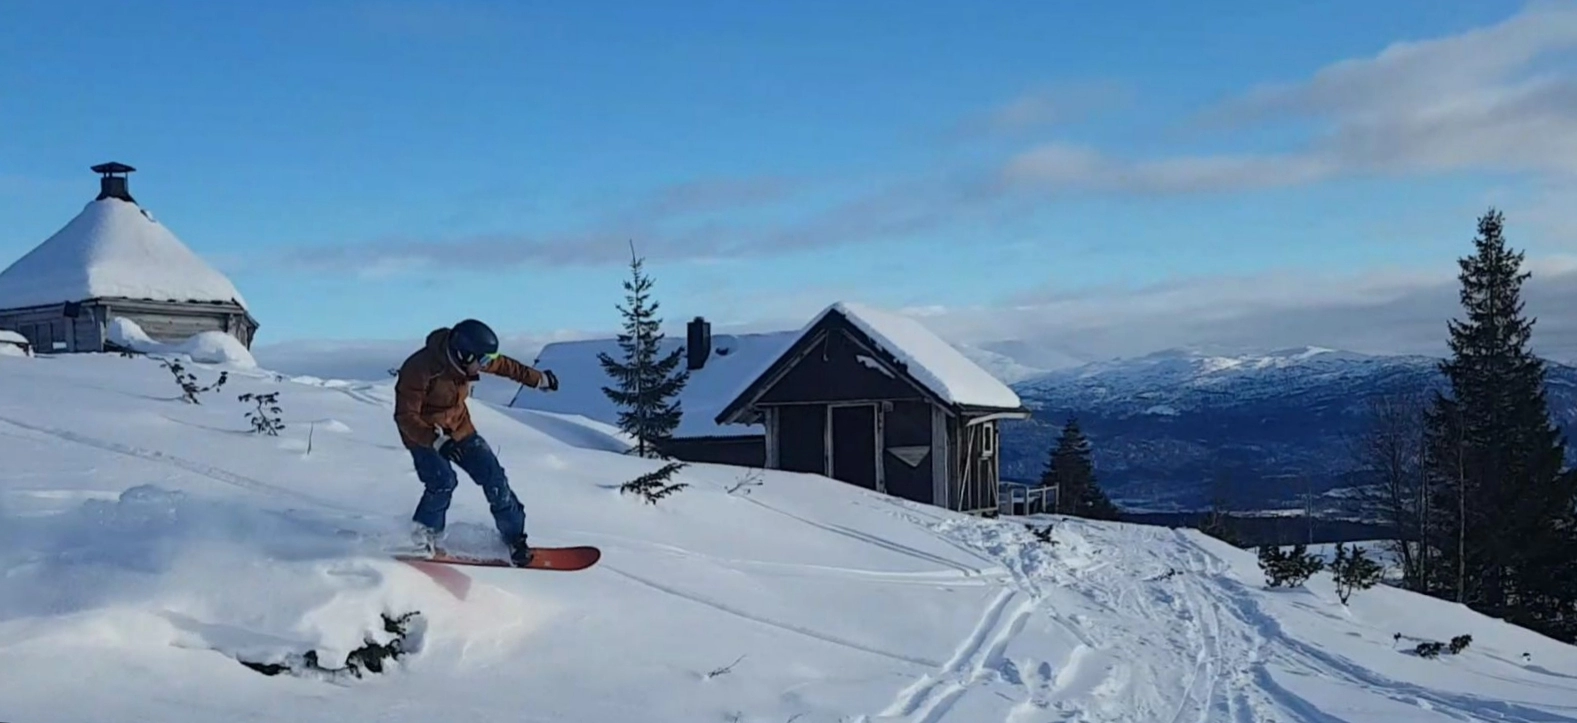 snowboarding in Norway